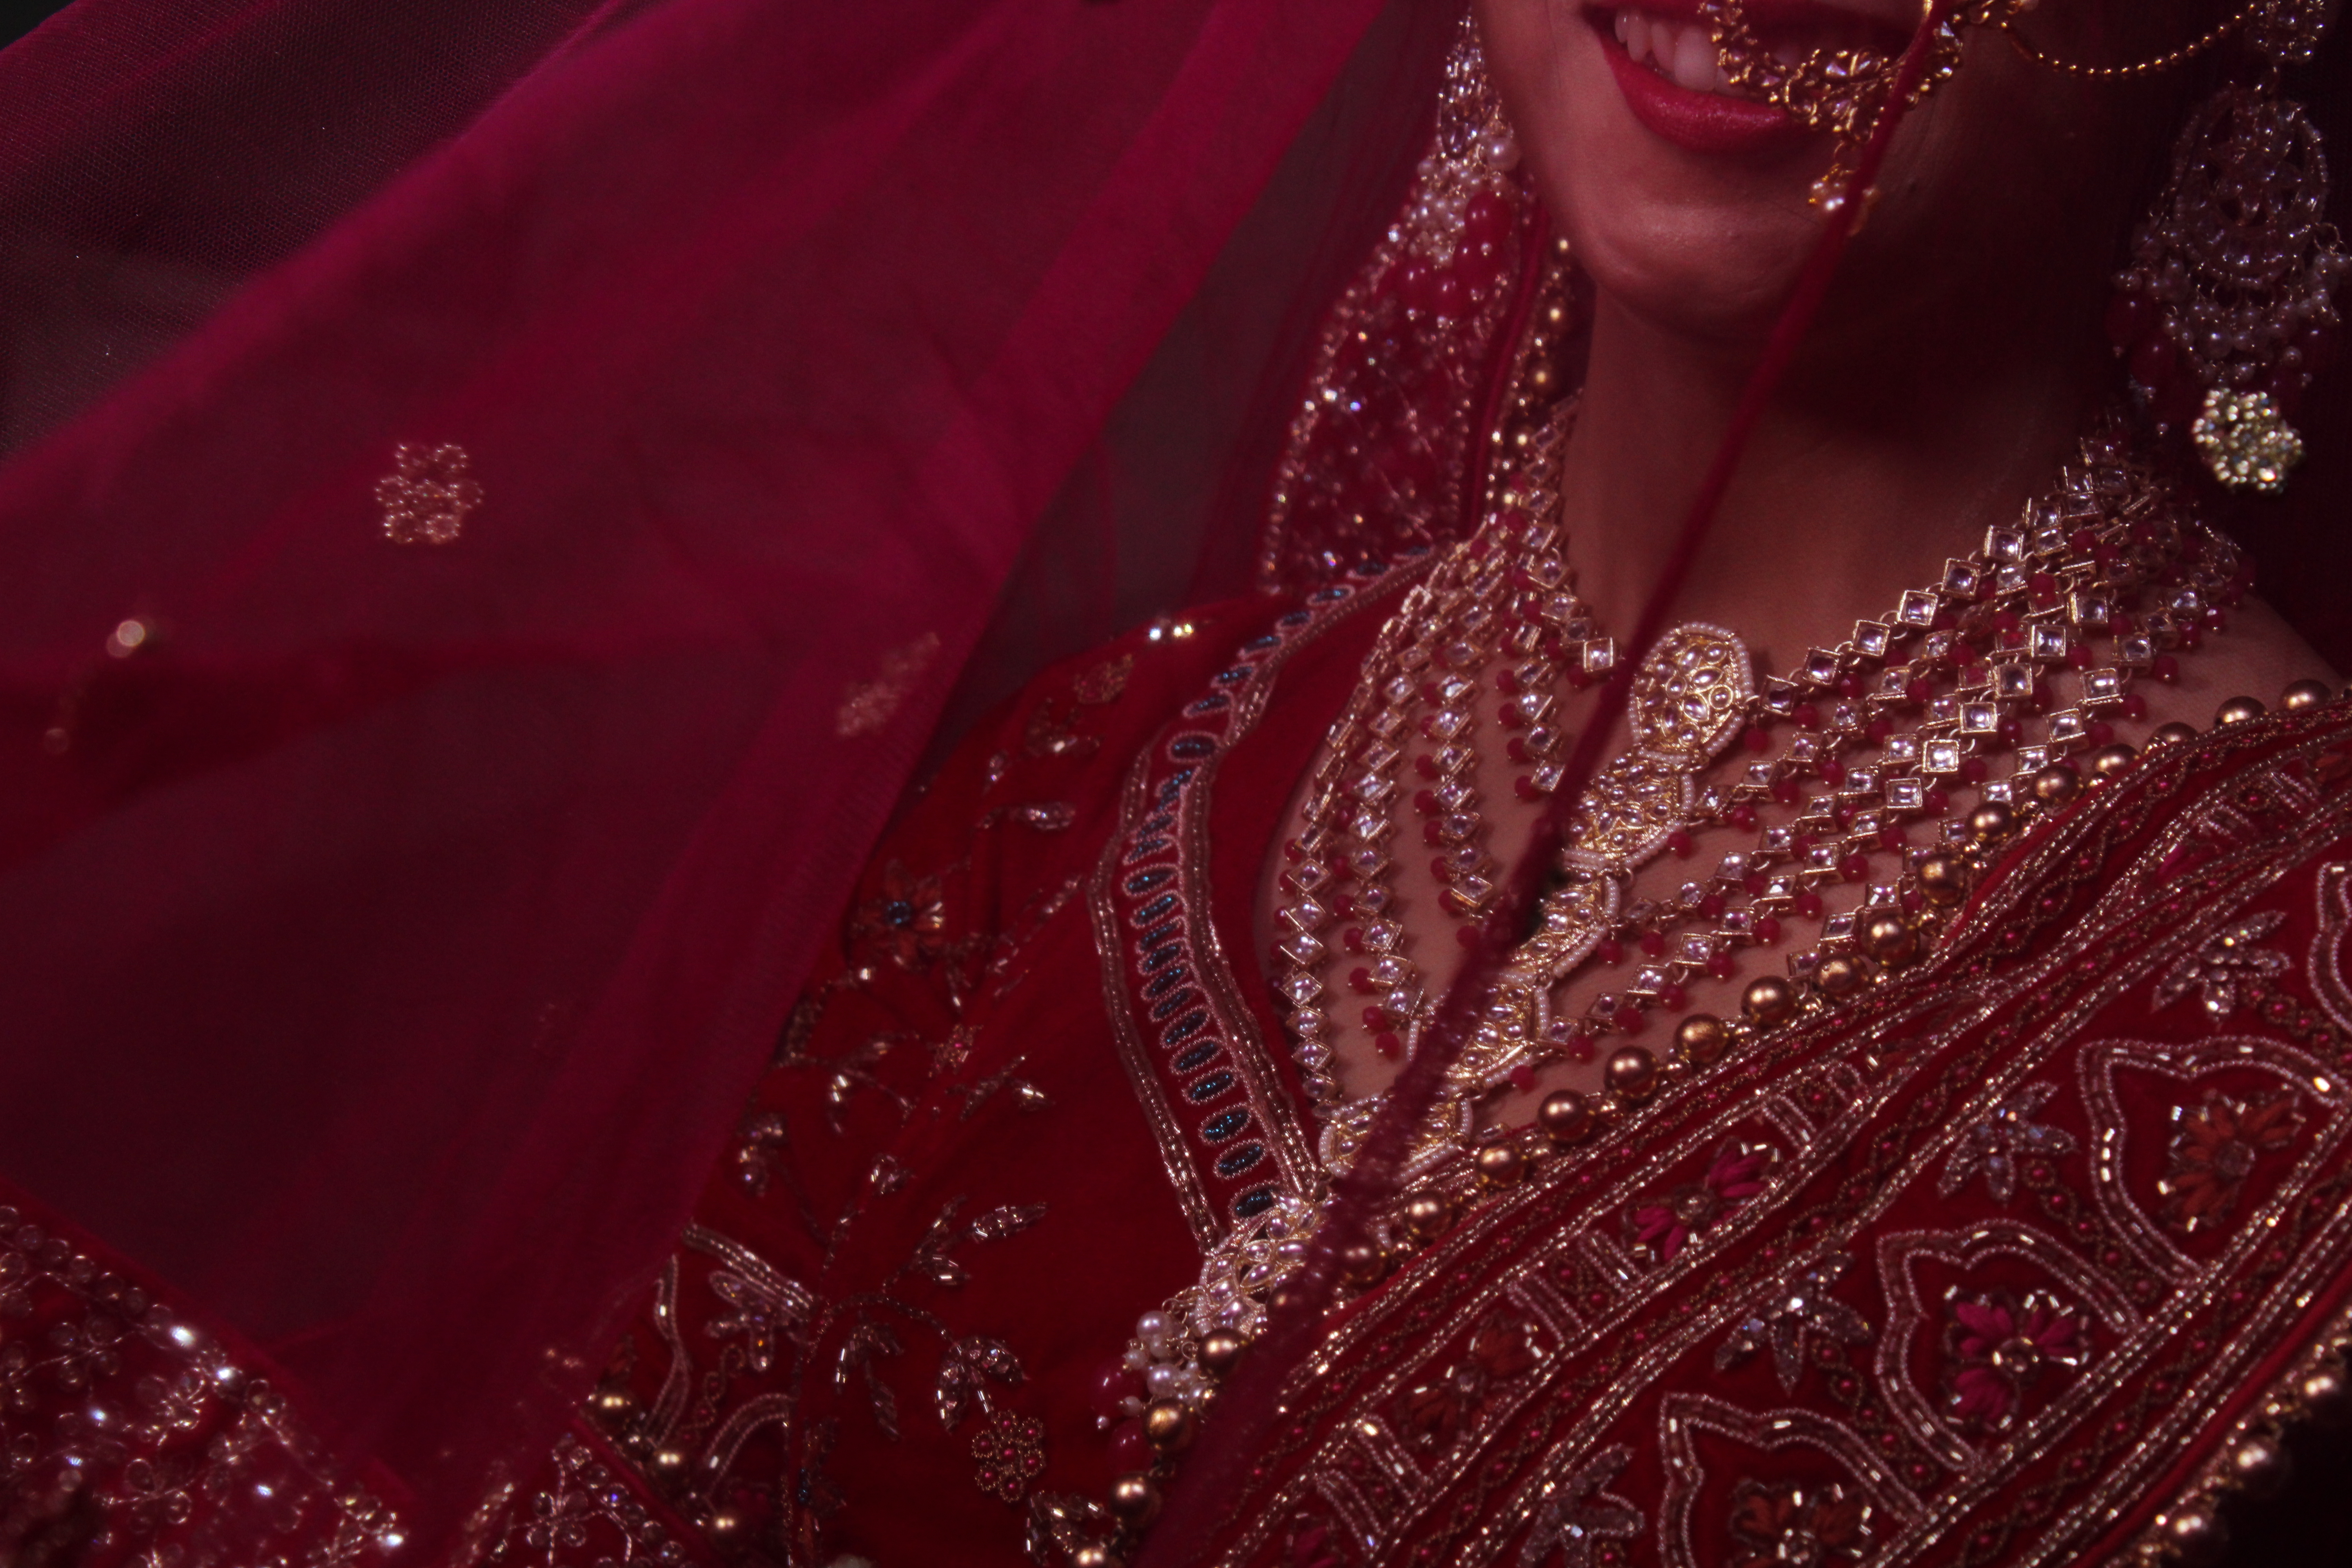 Mouni Roy's red bridal lehenga and brown smokey eye make-up will remind you  of Deepika Padukone and Katrina Kaif's wedding looks - Times of India